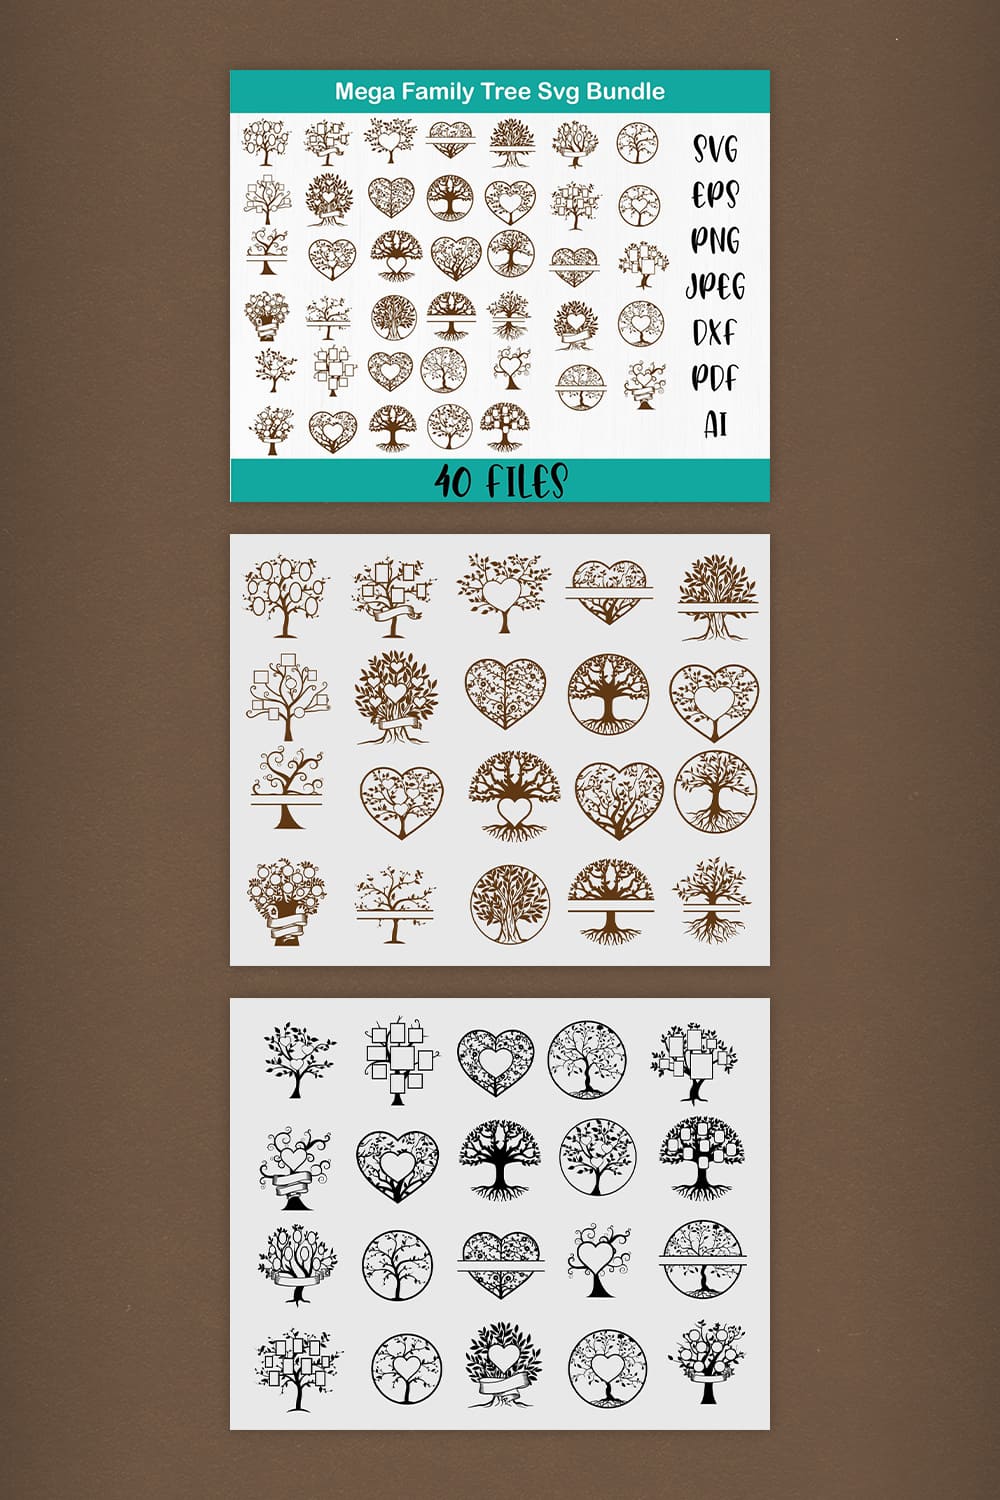 Mega Family Tree SVG Bundle - preview of Pinterest image.